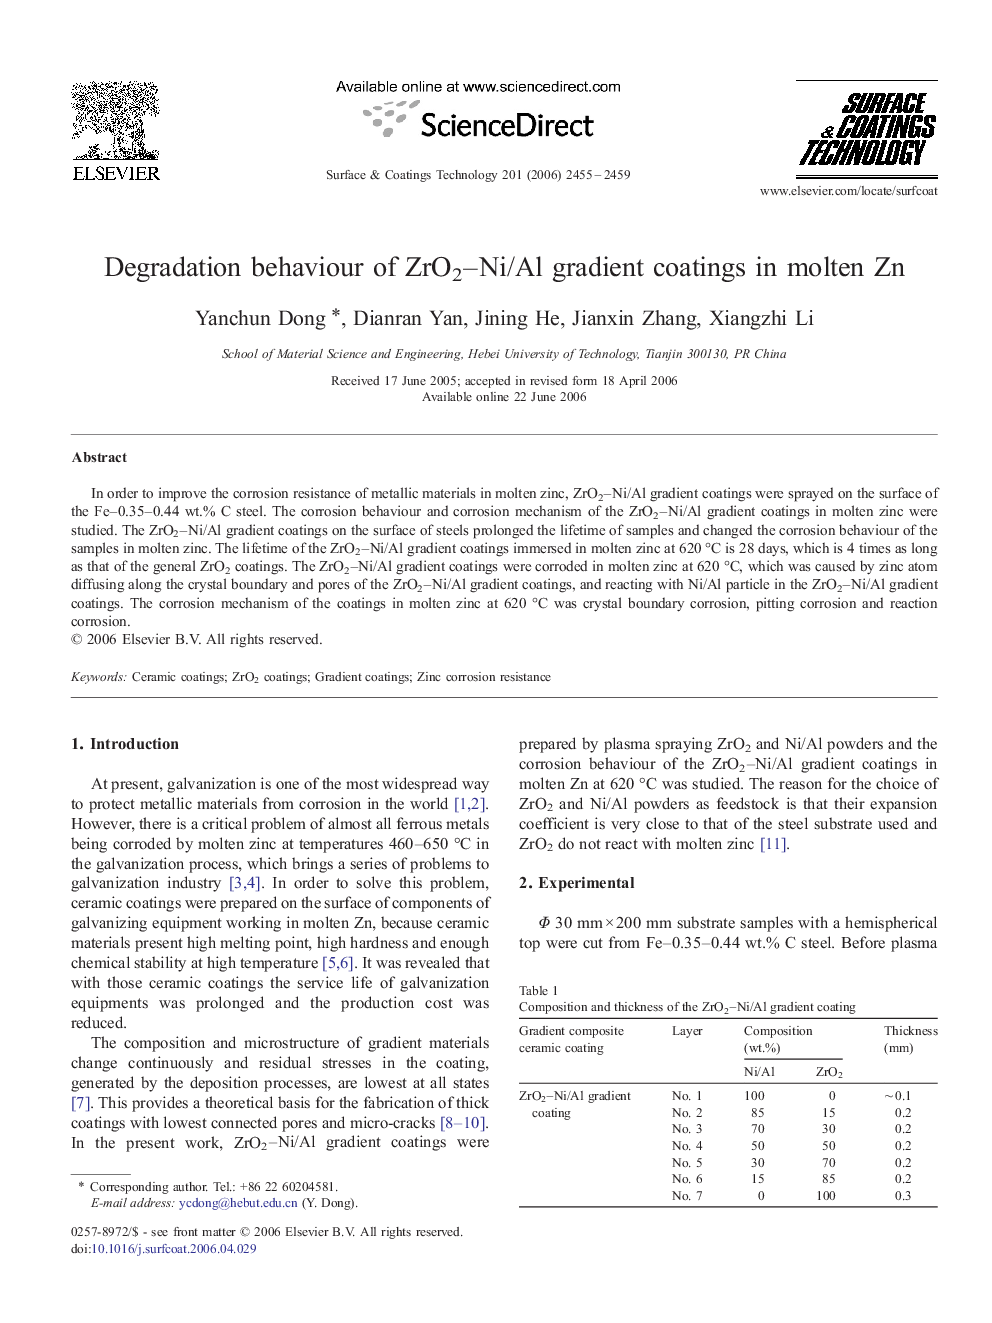 Degradation behaviour of ZrO2-Ni/Al gradient coatings in molten Zn